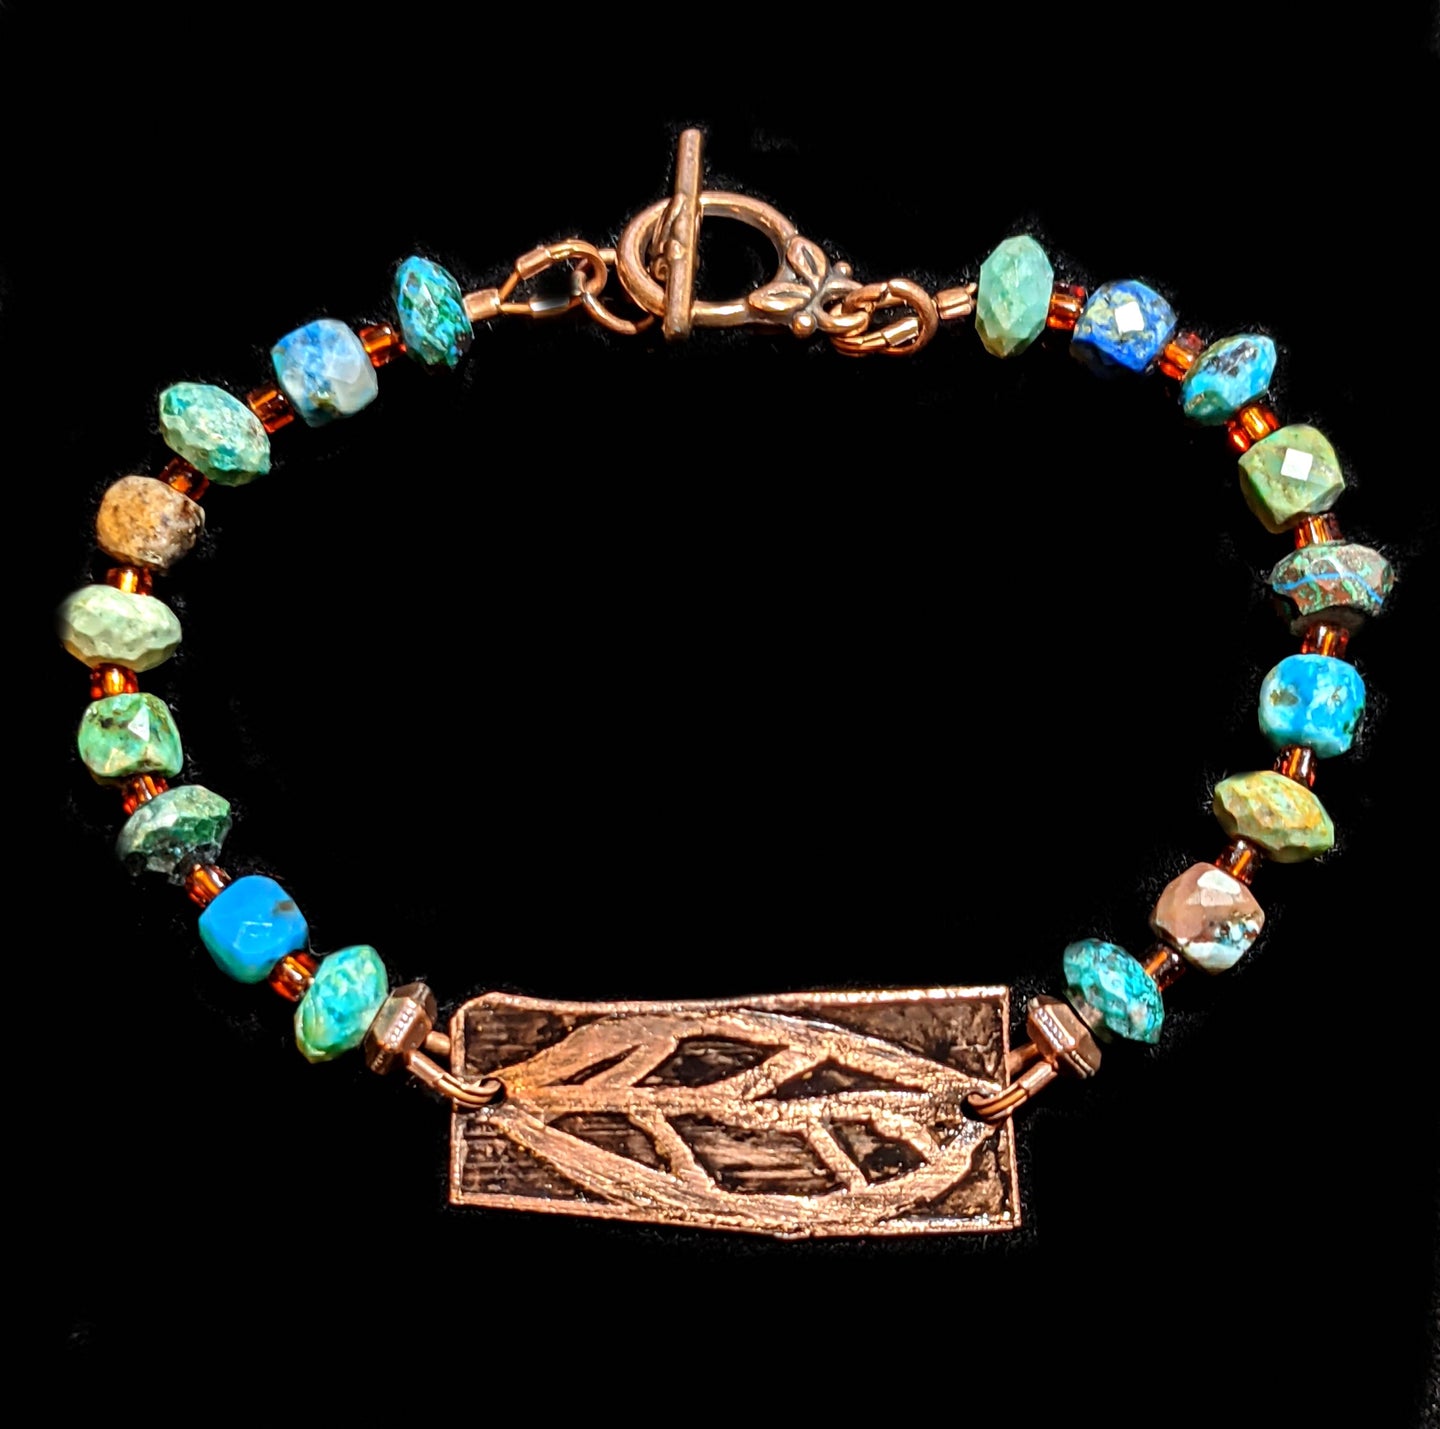 leaf & mixed stones bracelet - sunroot studio